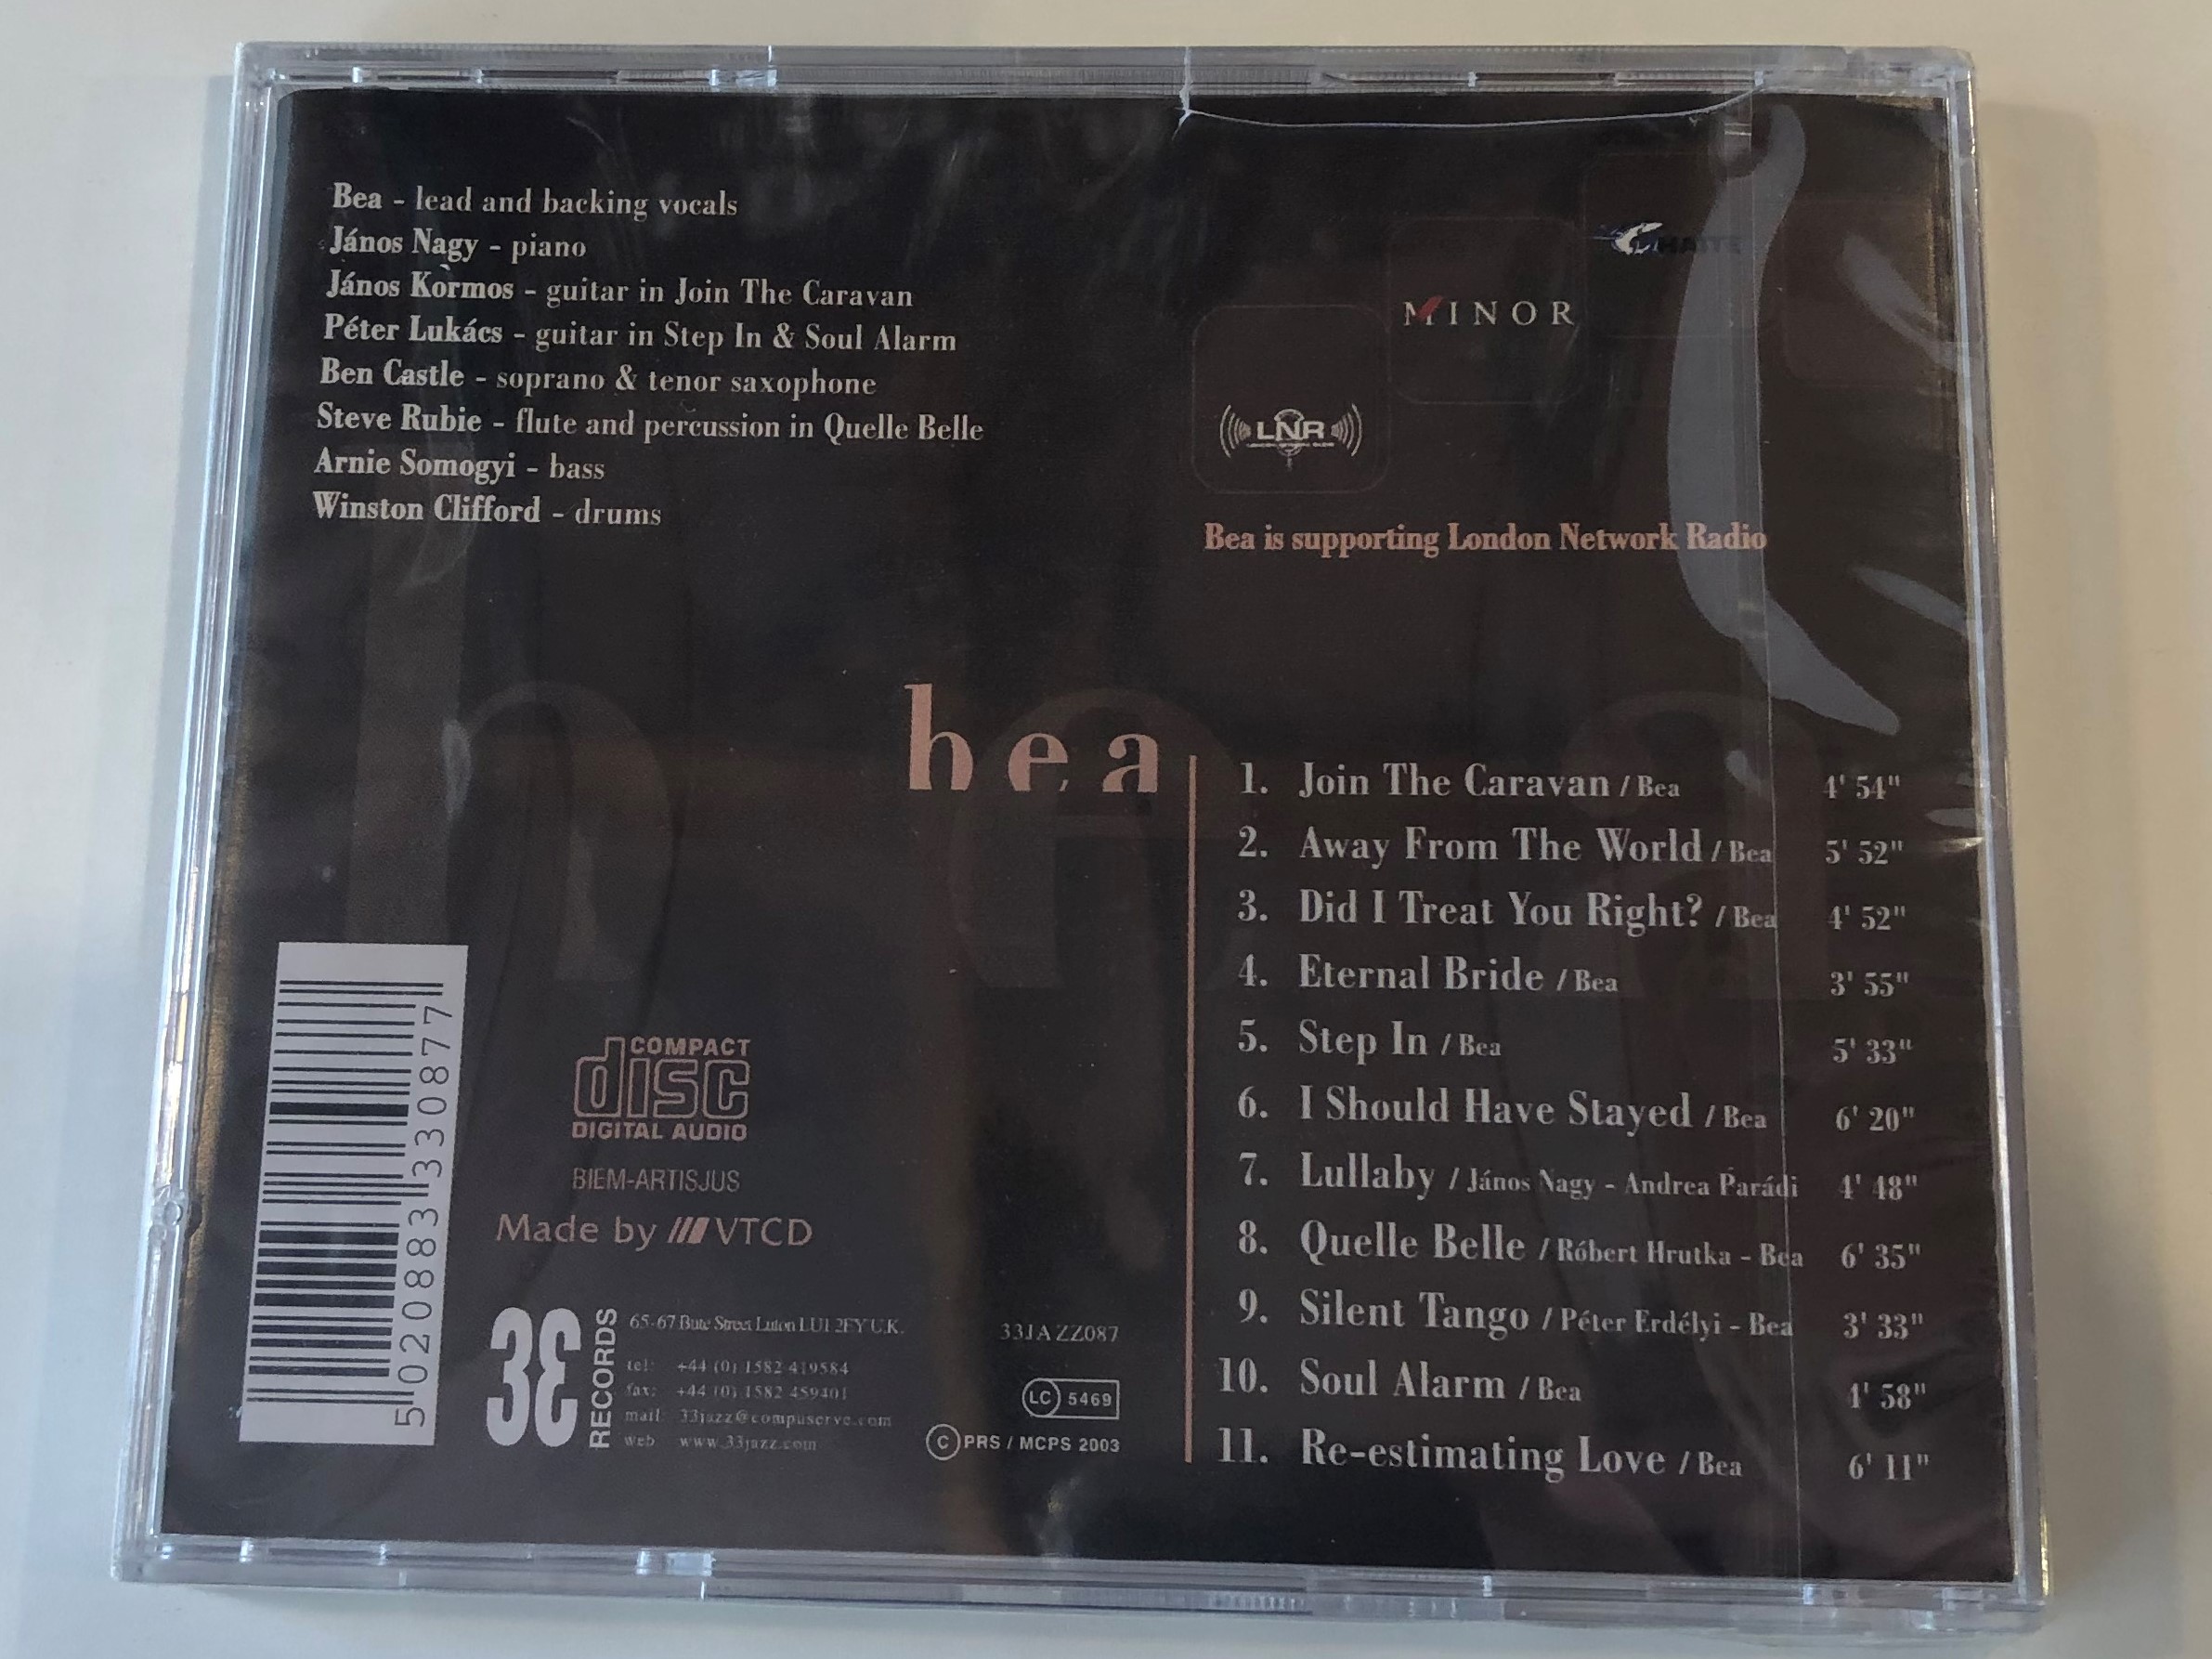 bea-33-records-audio-cd-2003-33jazz087-2-.jpg